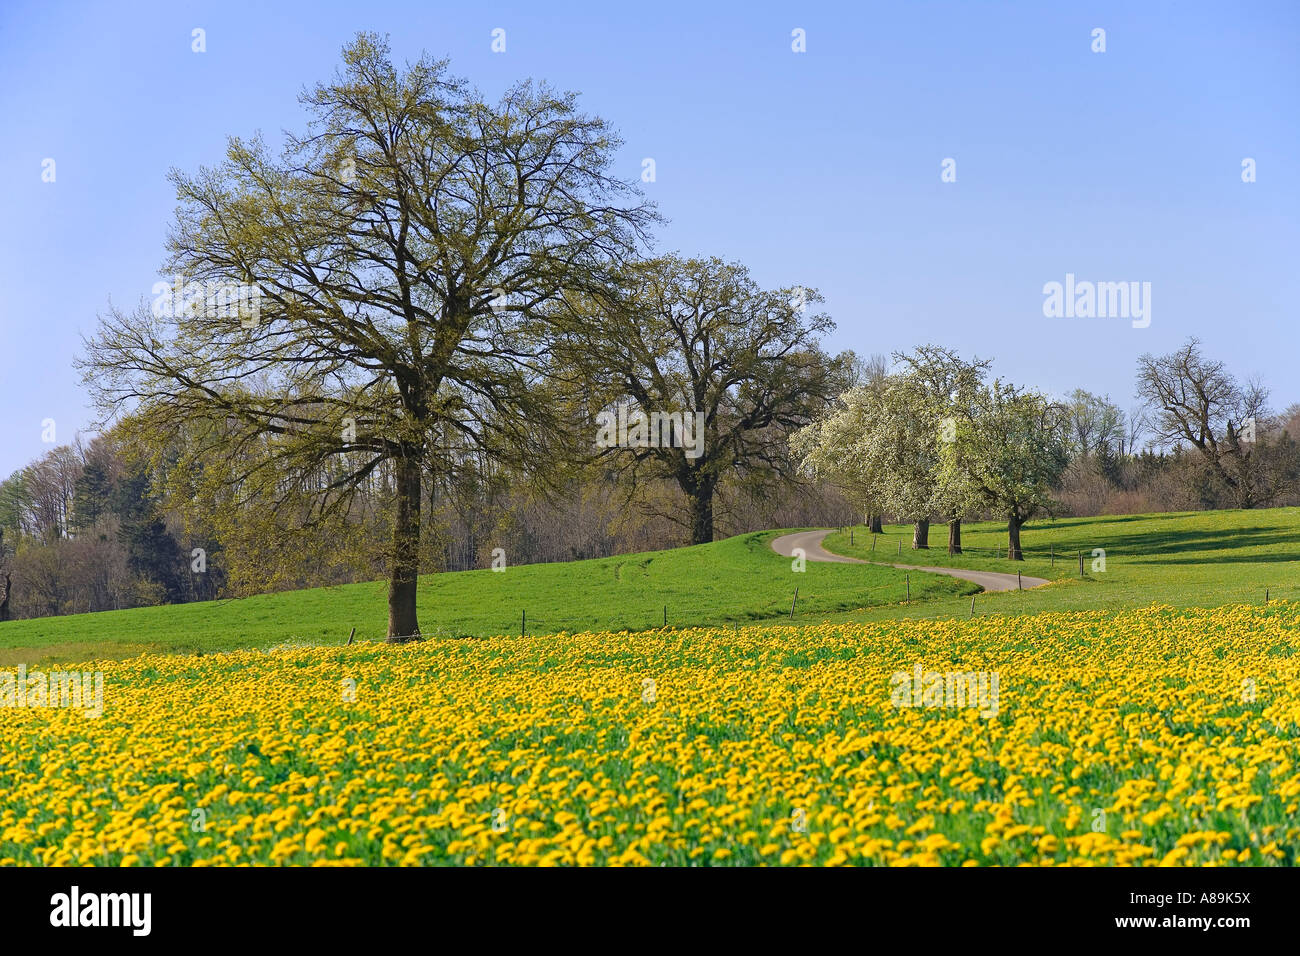 Meadow with dandelions Taraxacum officinale) and English oak trees (Quercus robur), Sense district, canton, Fribourg, Switzerla Stock Photo